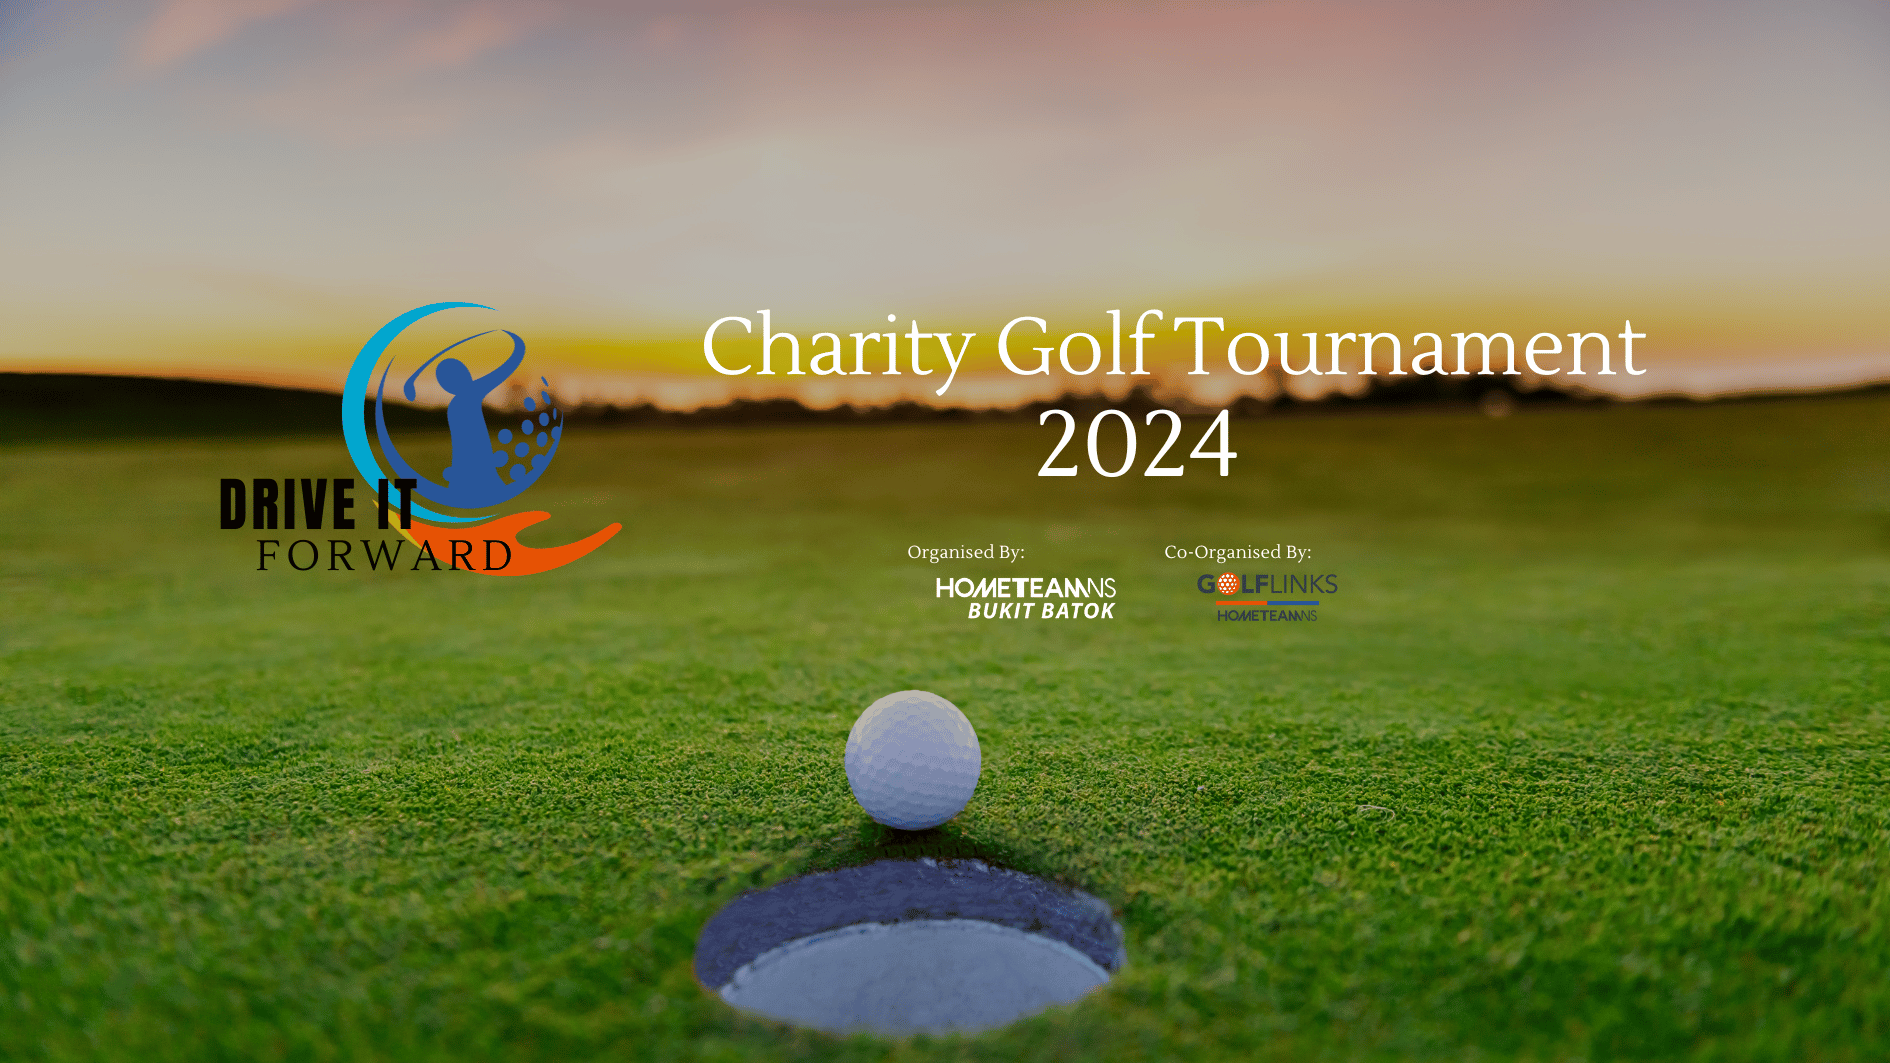 Charity Golf Tournament 2024 DriveitforwardbannerLOW